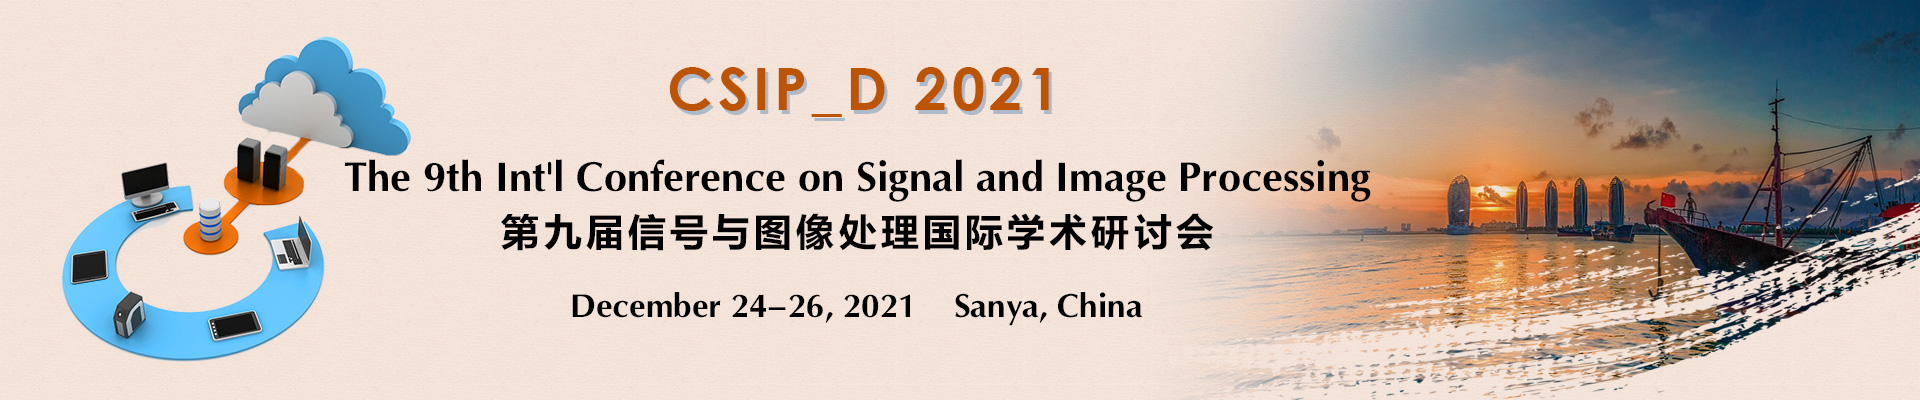 The 9th Int'l Conference on Signal and Image Processing (CSIP_D 2021, Sanya, Hainan, China